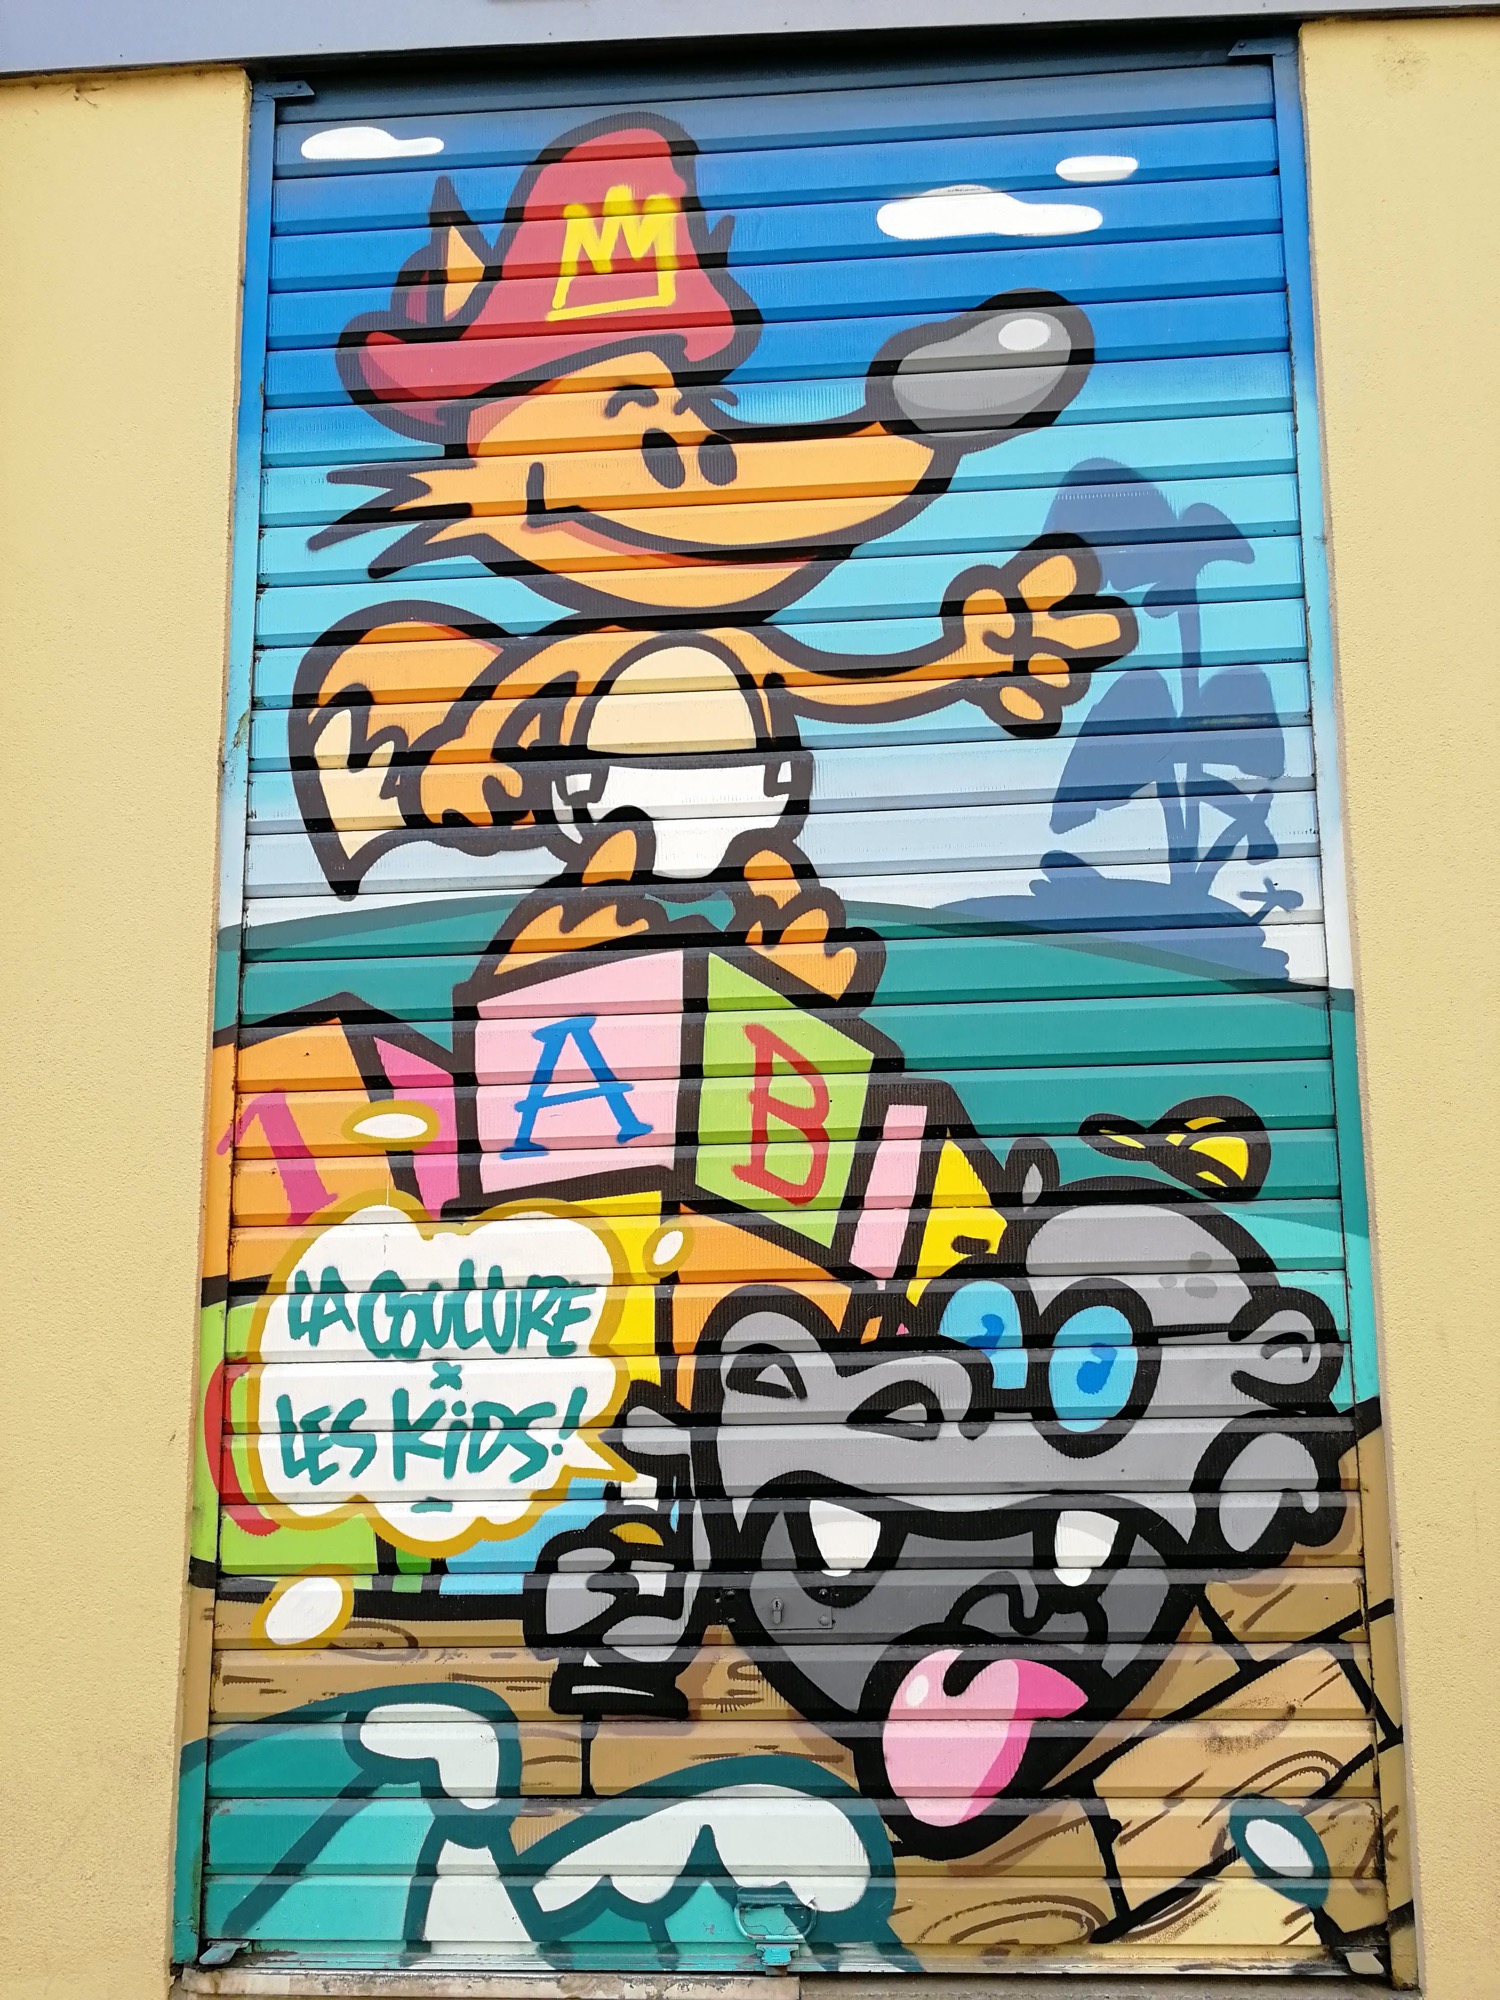 Graffiti 1605  captured by Rabot in Lyon France